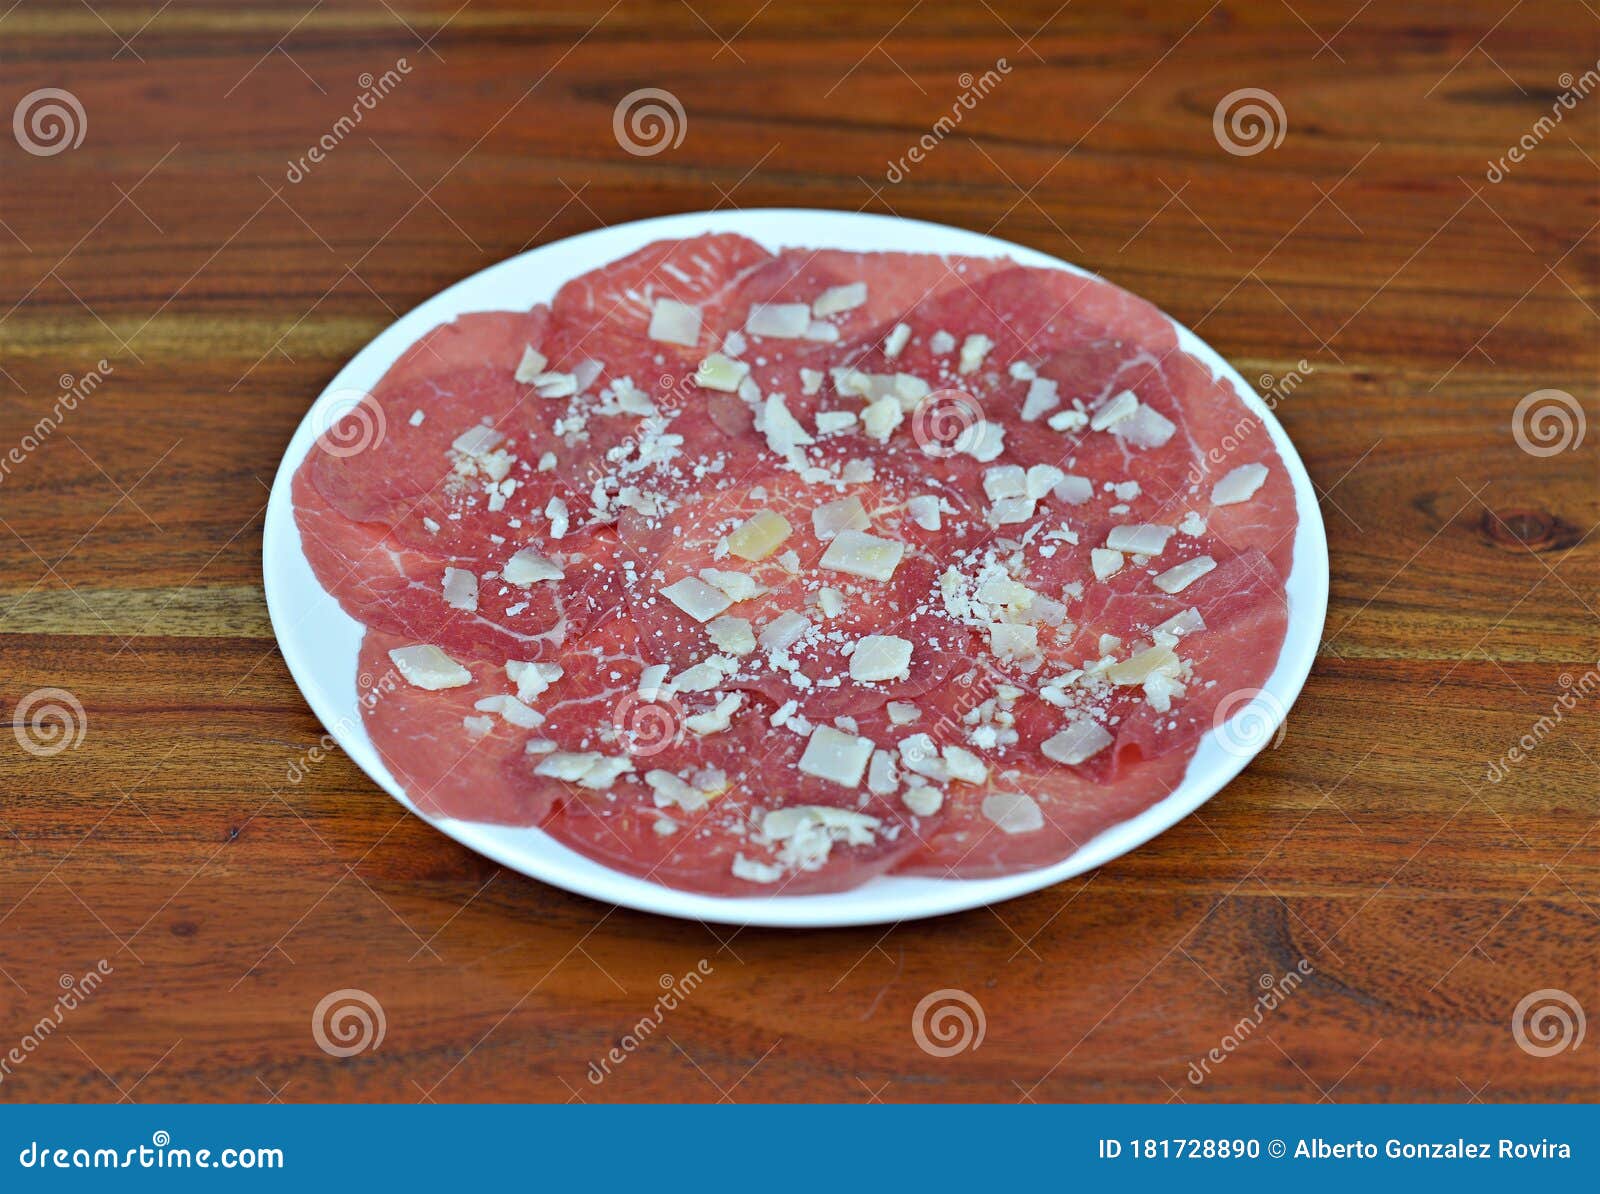 carpaccio beef dish with parmesan cheese